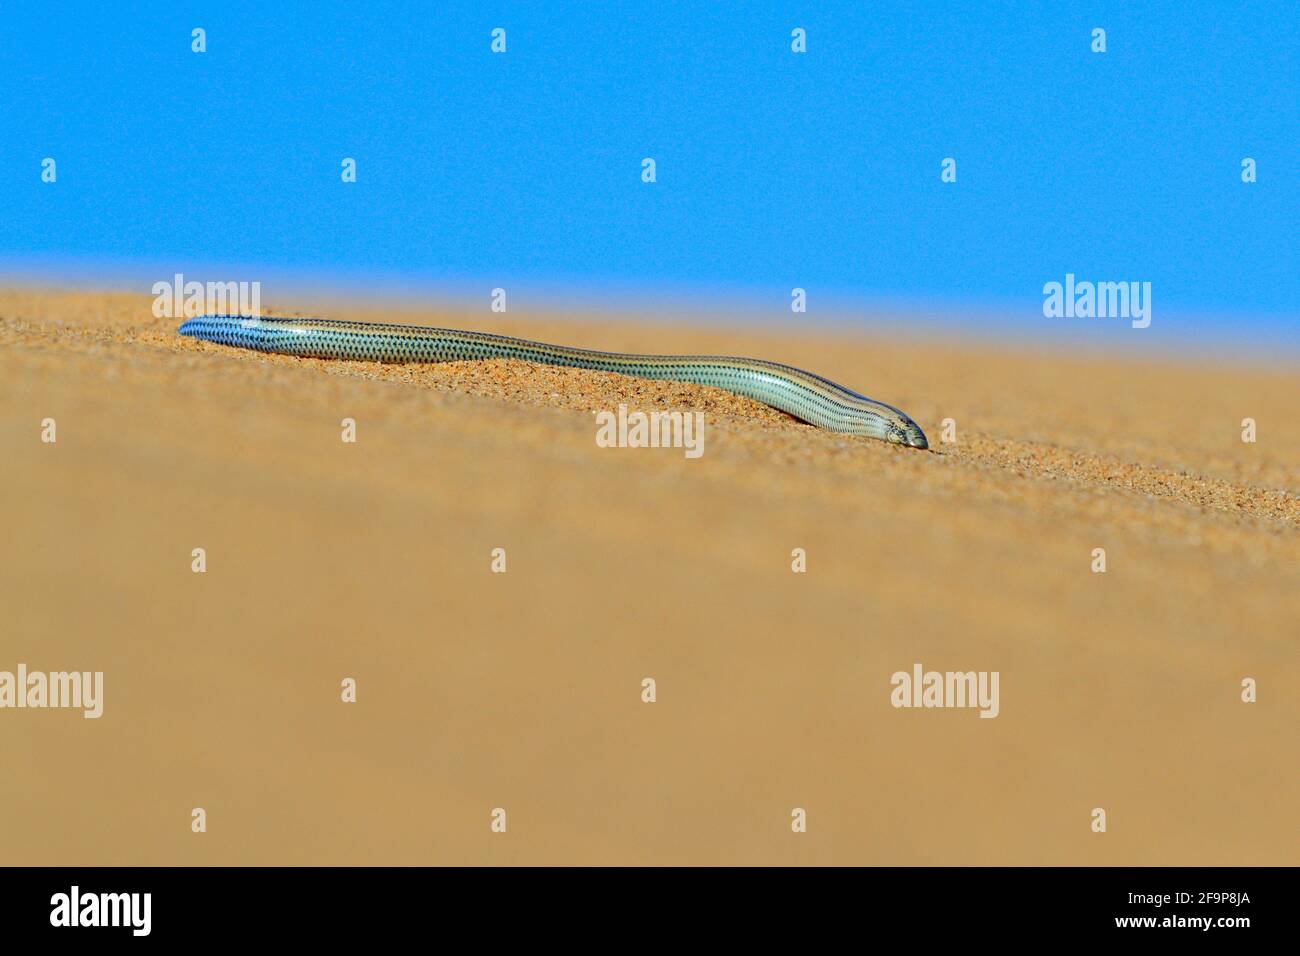 Fitzsimmons' burrowing skink, Typlacontias brevipes, on sand dune, Swakopmund, Dorob National Park, Namibia. Desert animal in the habitat, orange sand Stock Photo